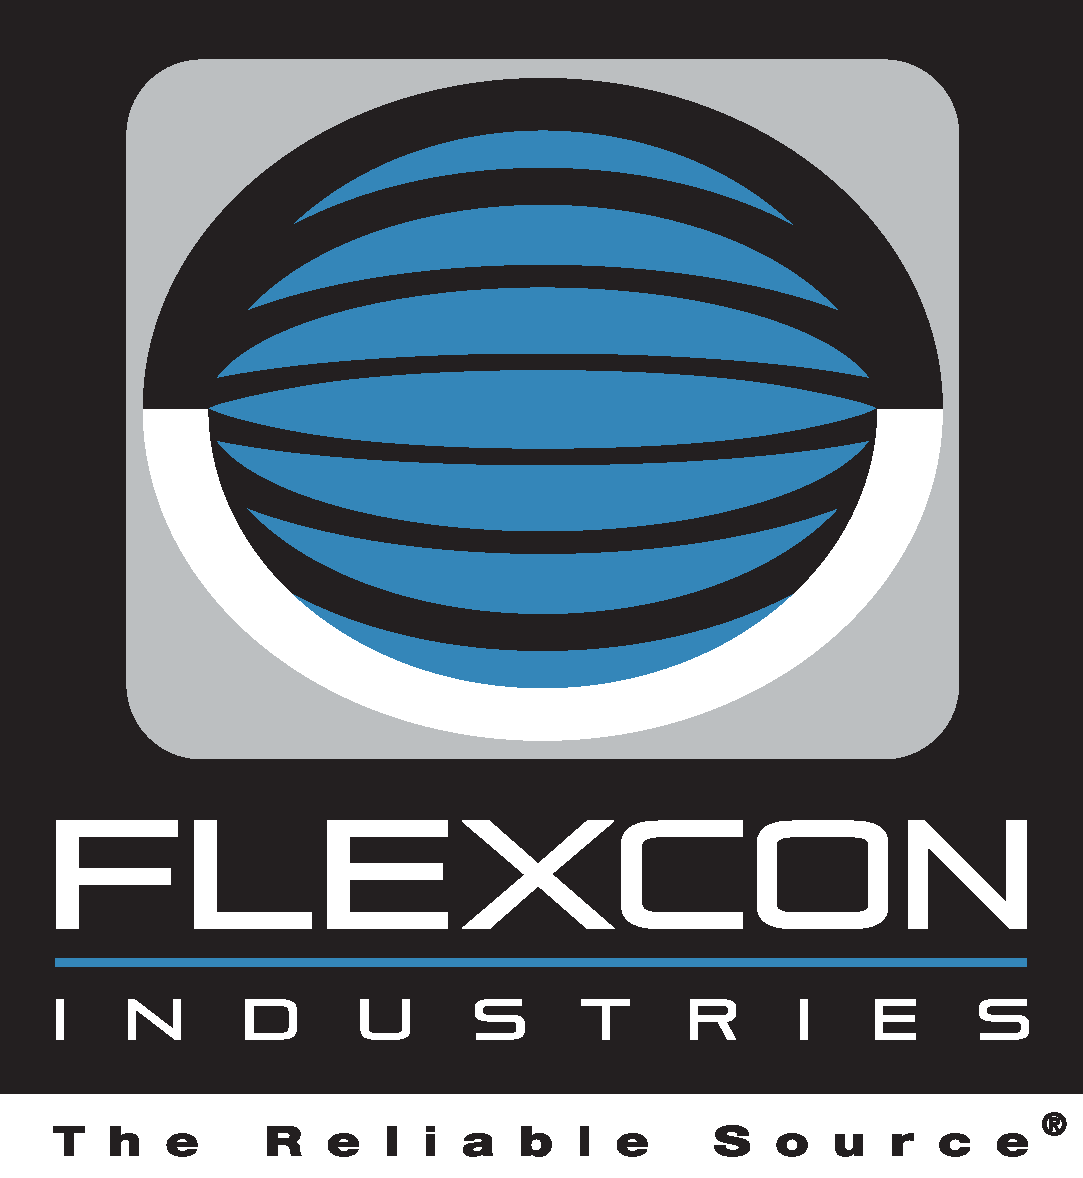 FLEXCON INDUSTRIES